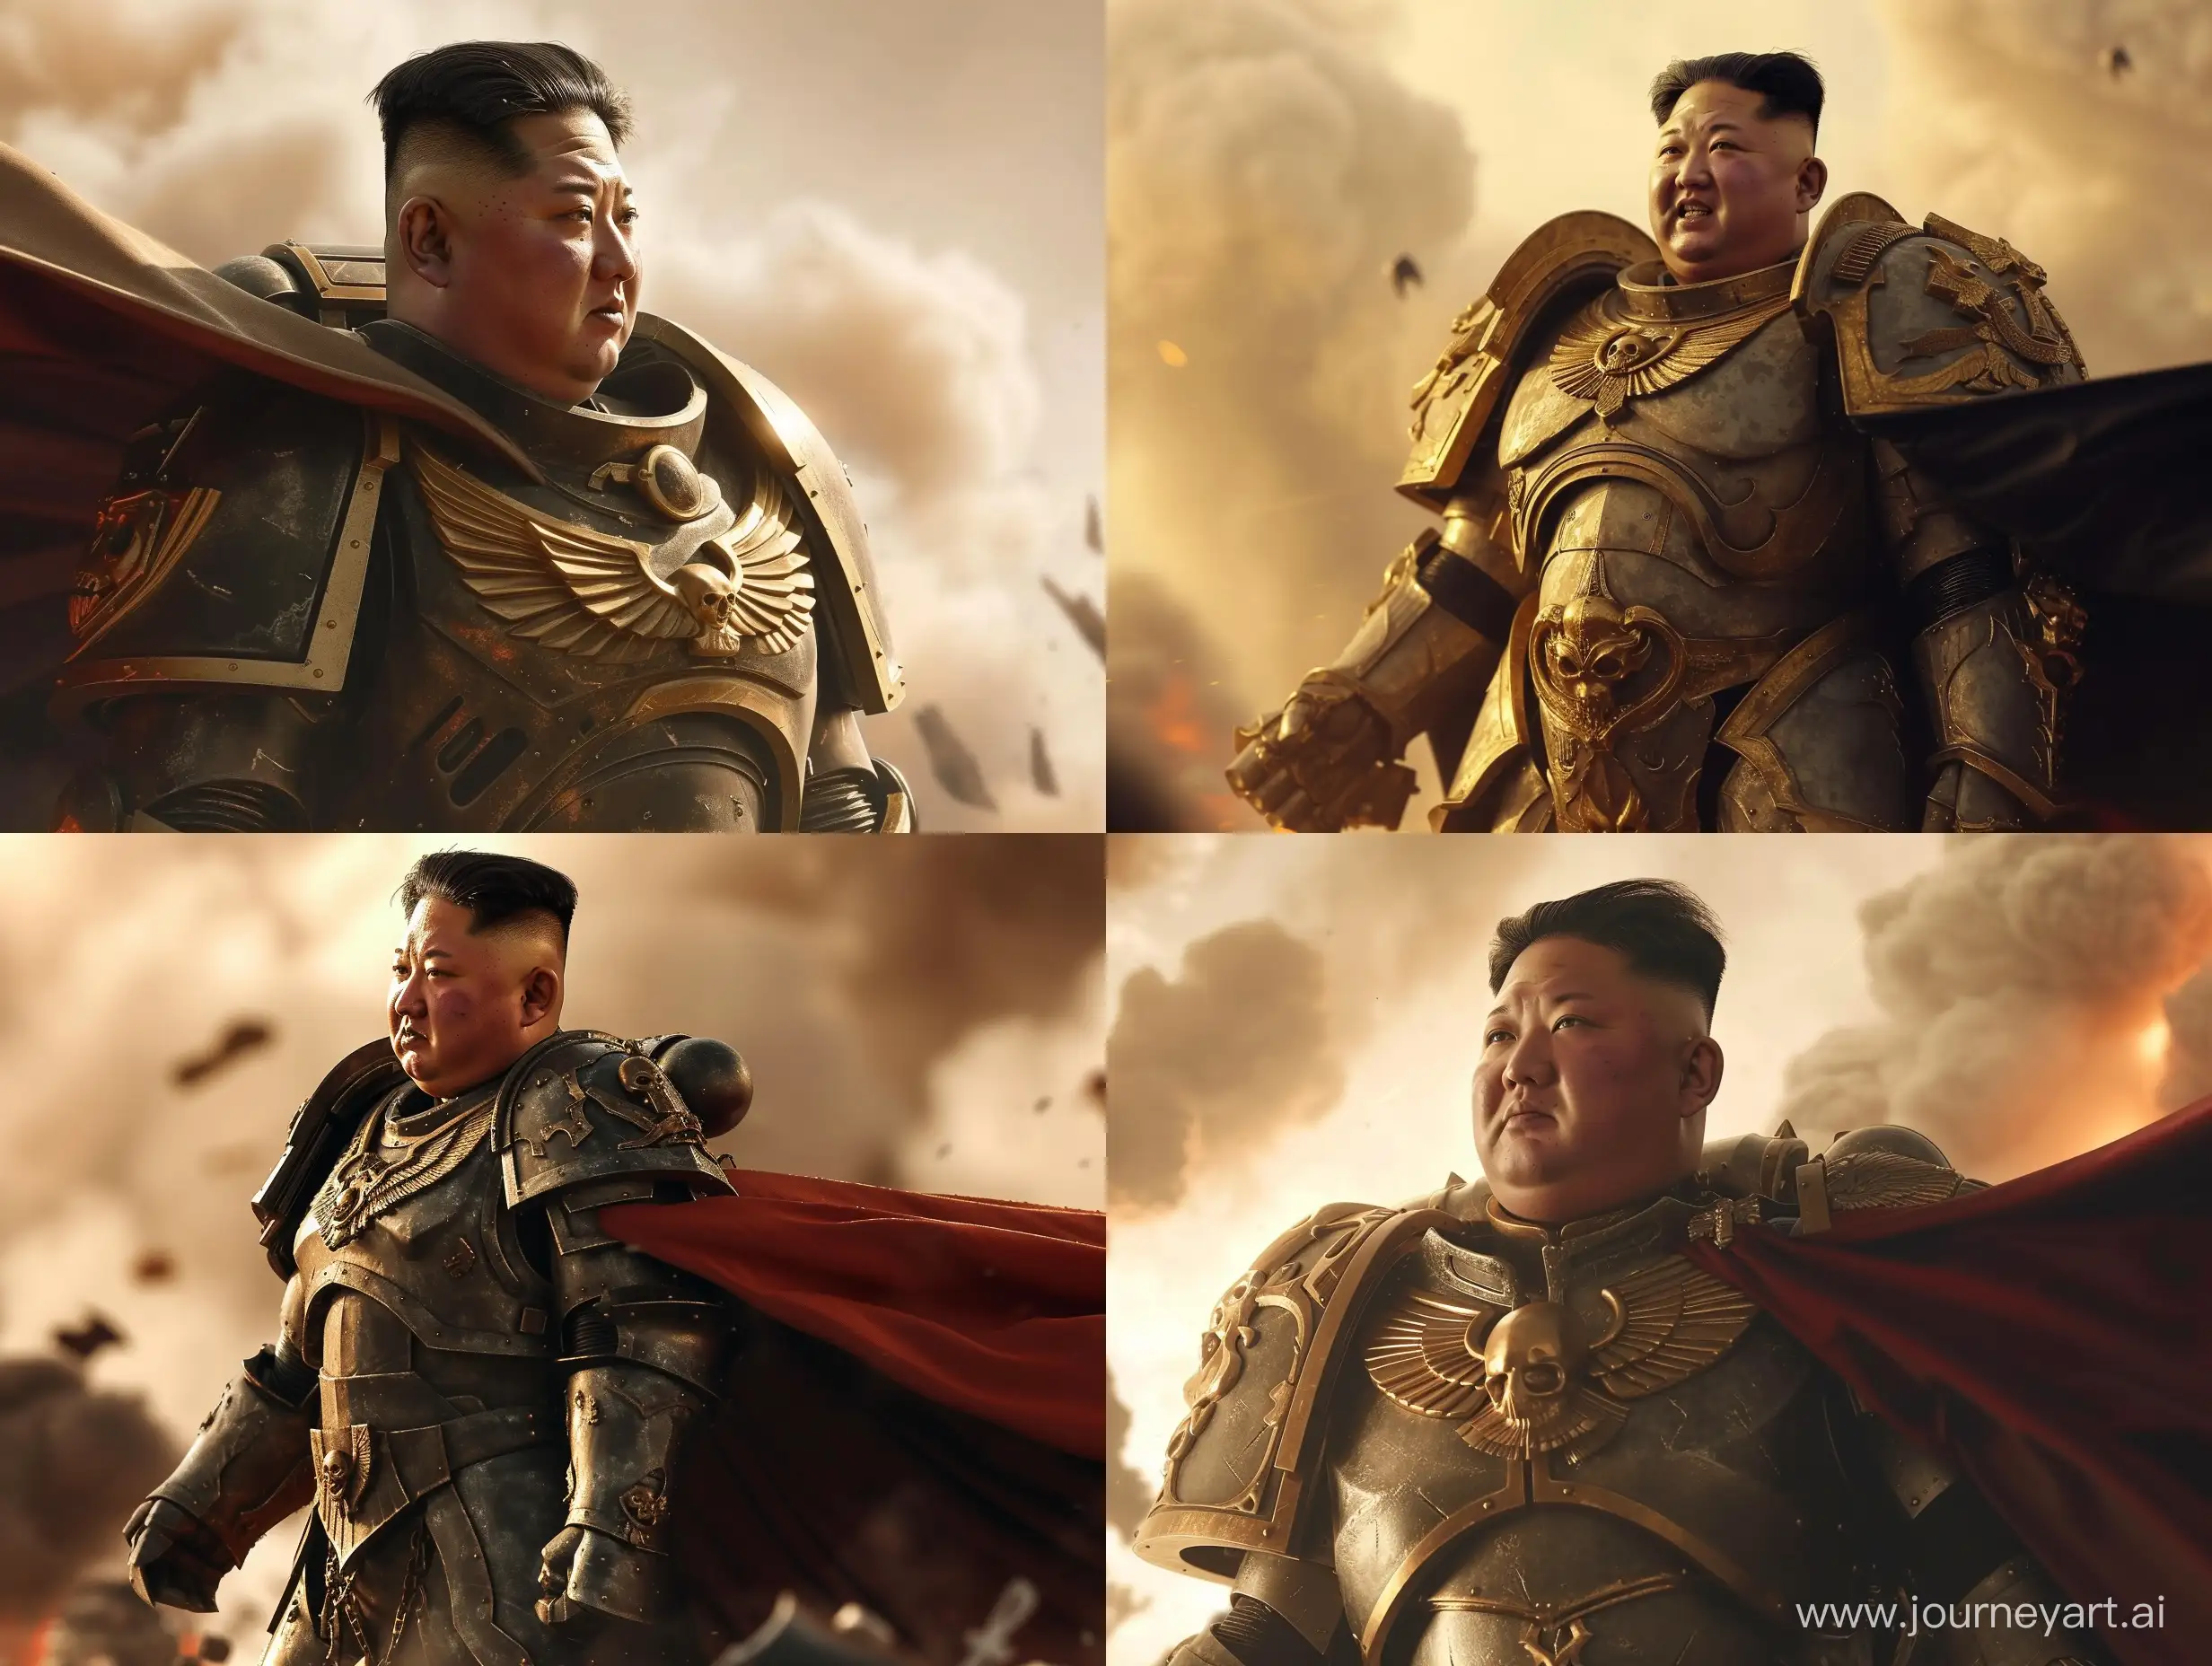 God-Emperor-Kim-Jong-Un-Surveys-PostApocalyptic-Realm-in-Epic-Nuclear-War-Scene